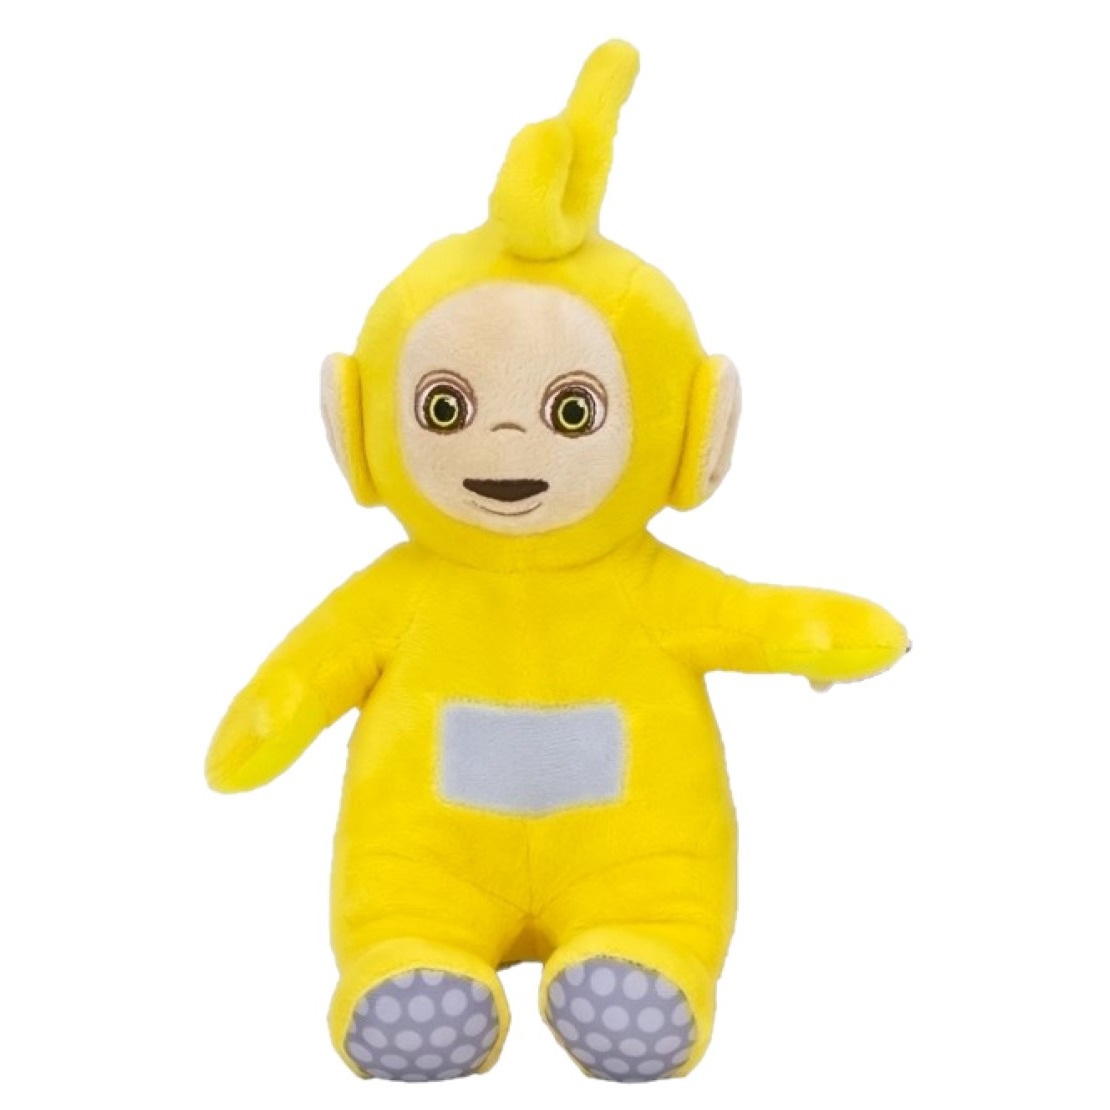 Pluche Teletubbies speelgoed knuffel Laa Laa geel 36 cm -